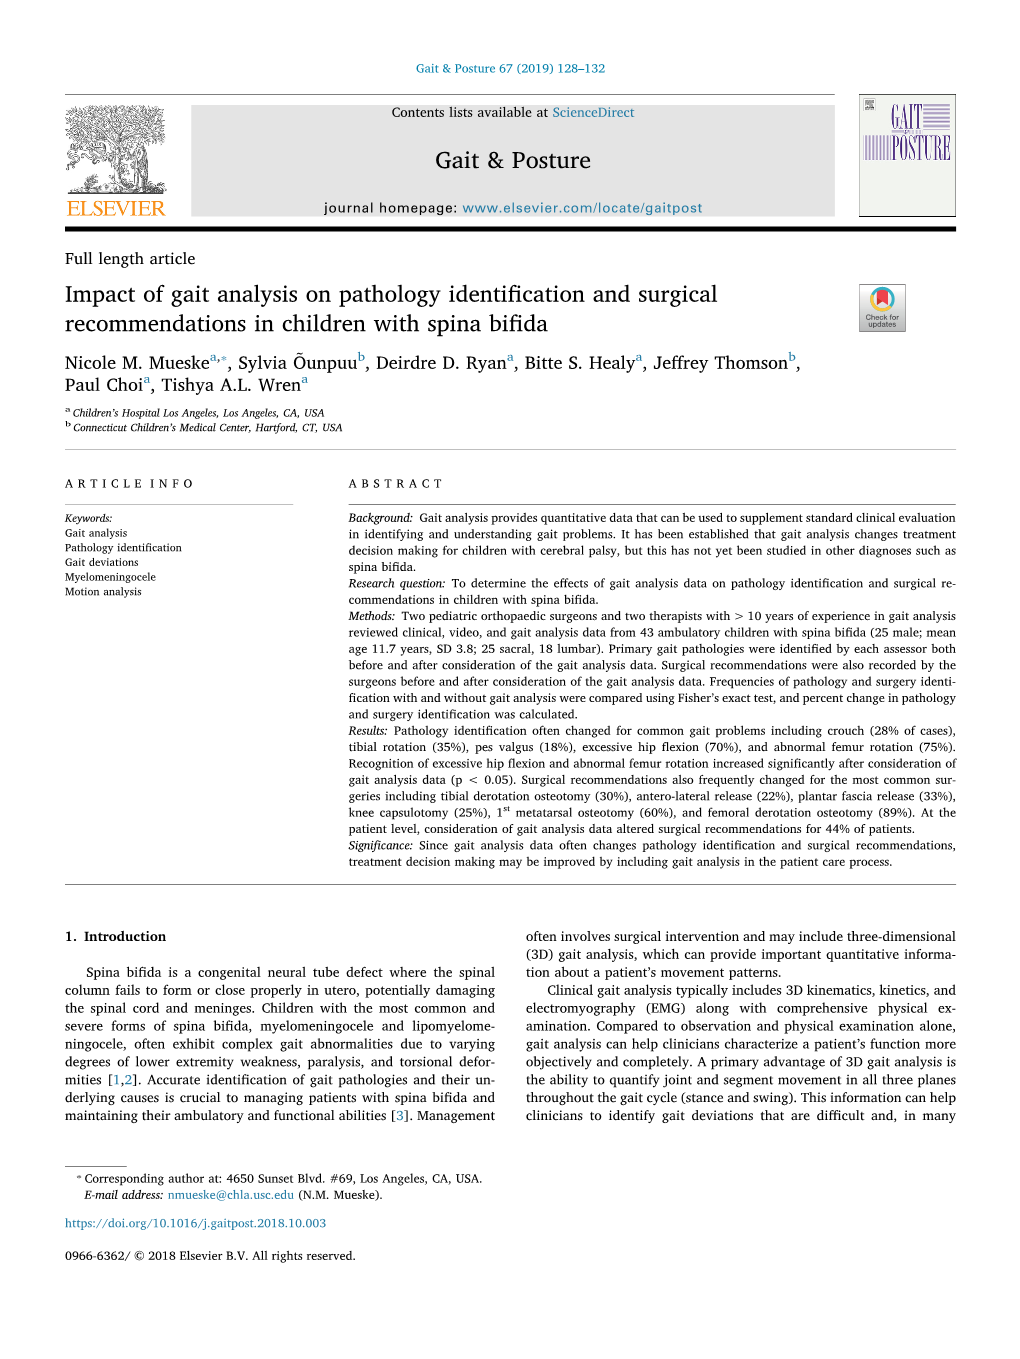 Impact of Gait Analysis on Pathology Identification and Surgical